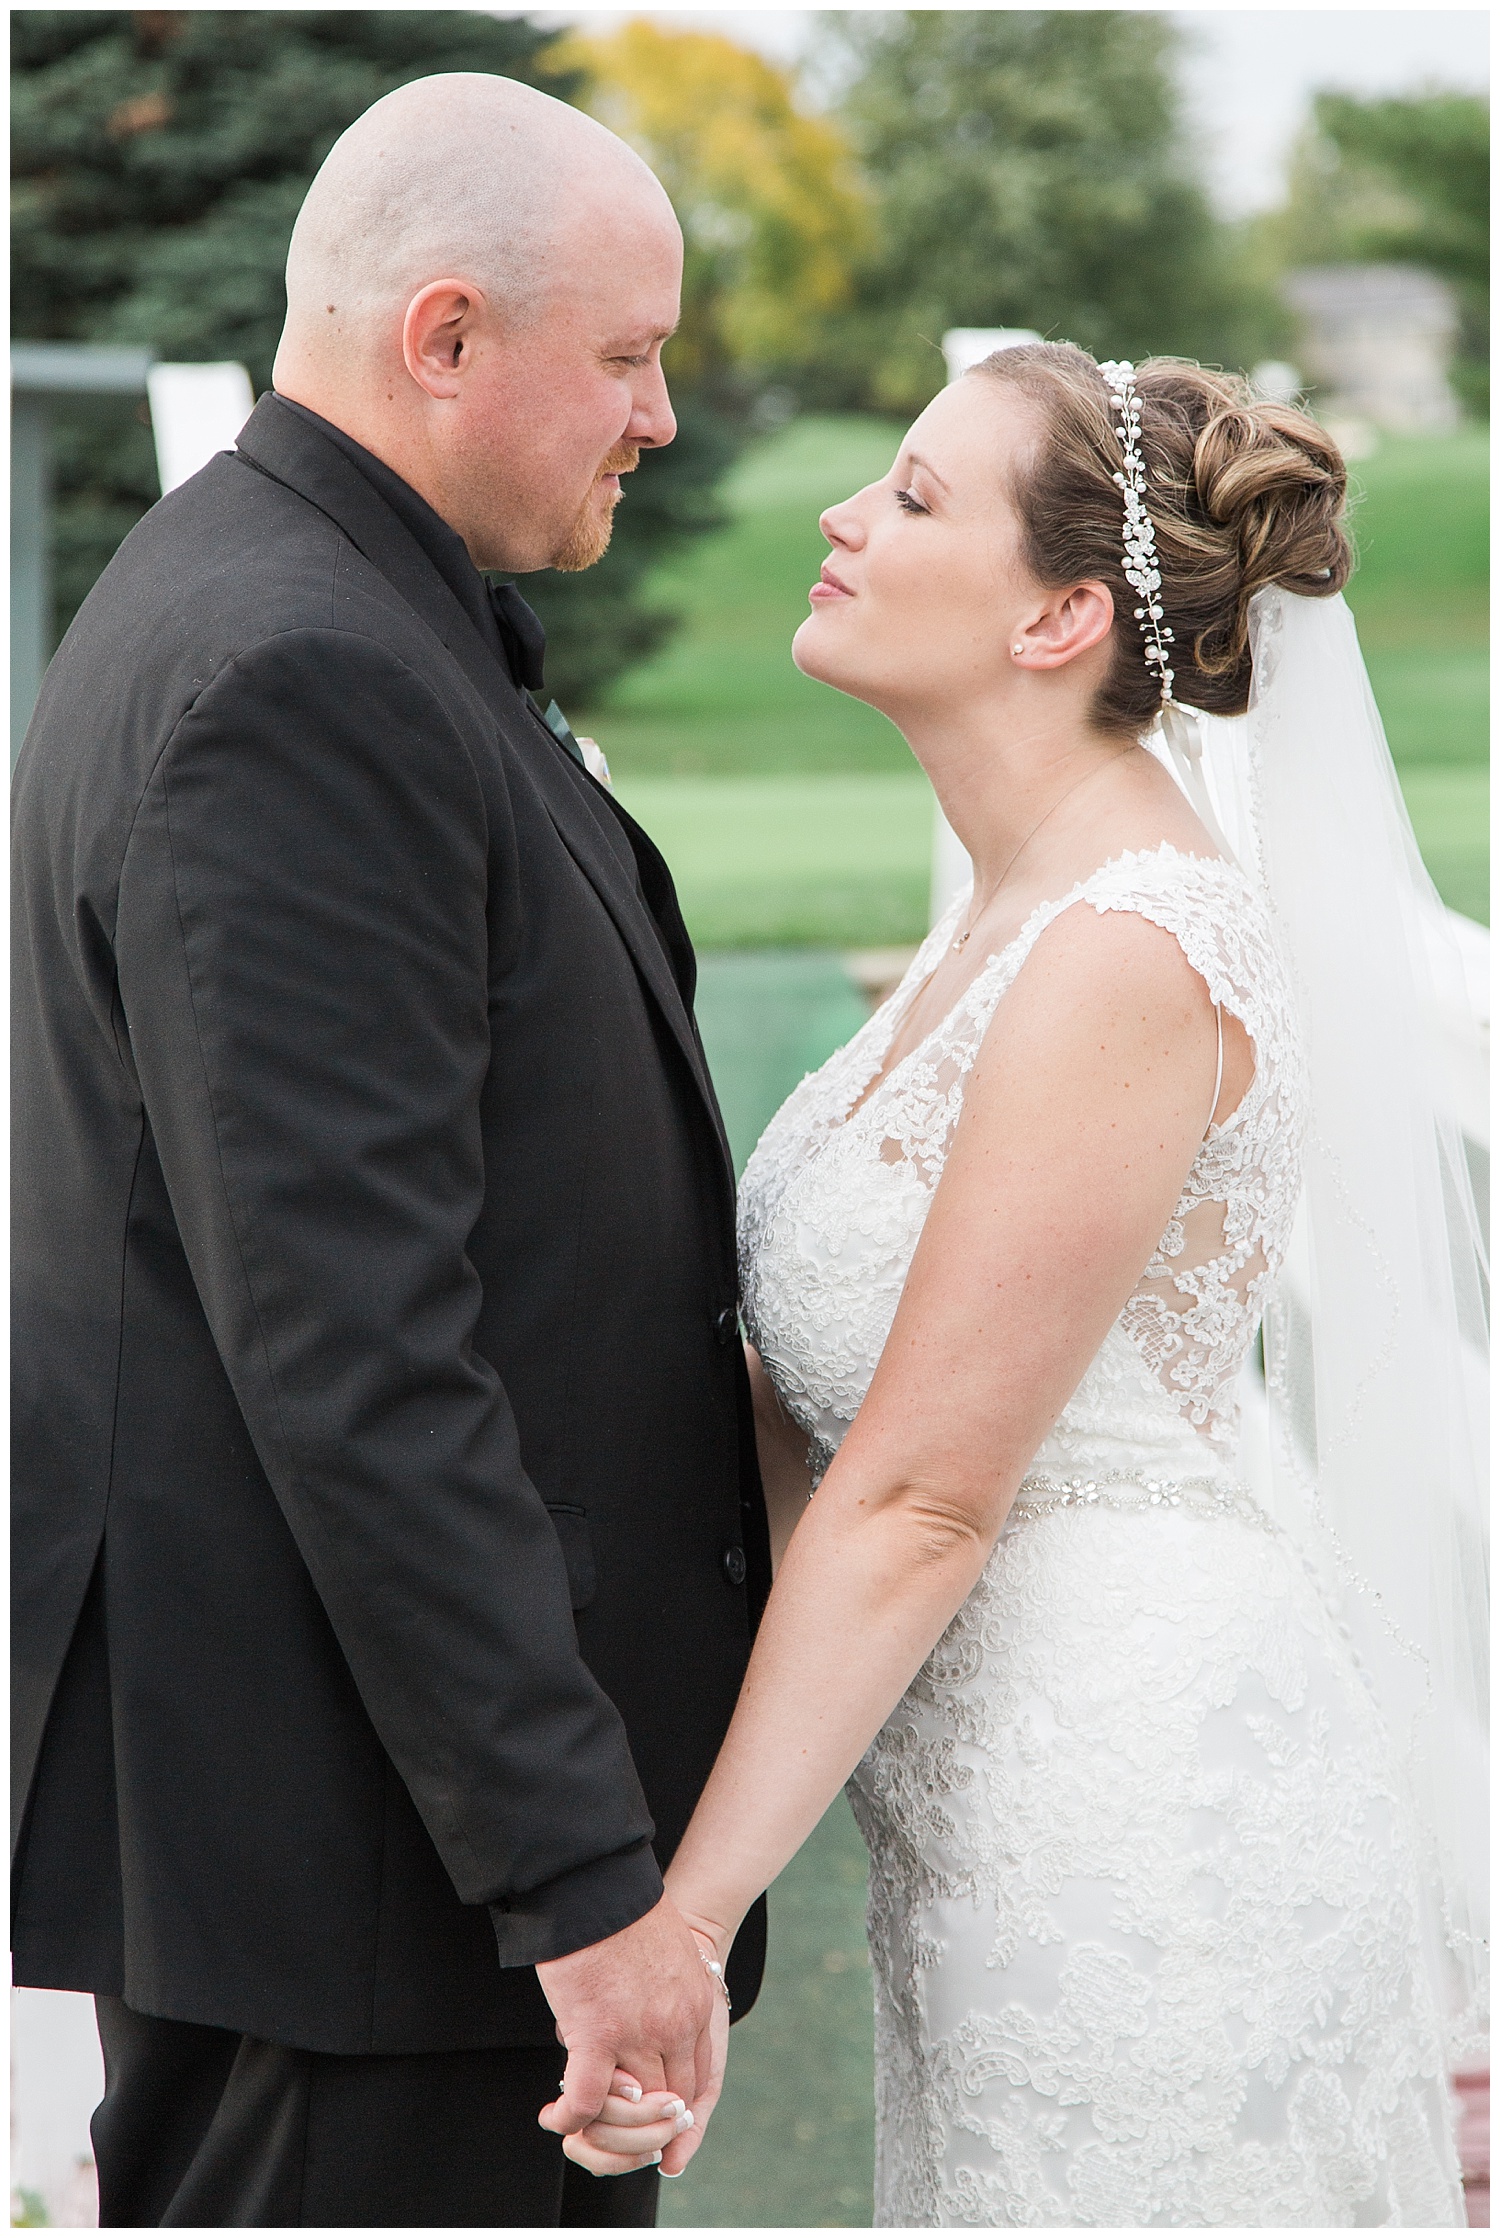 Jessica and Scott McKay - Terry Hills Golf Course - Batavia NY - Lass and Beau-722_Buffalo wedding photography.jpg